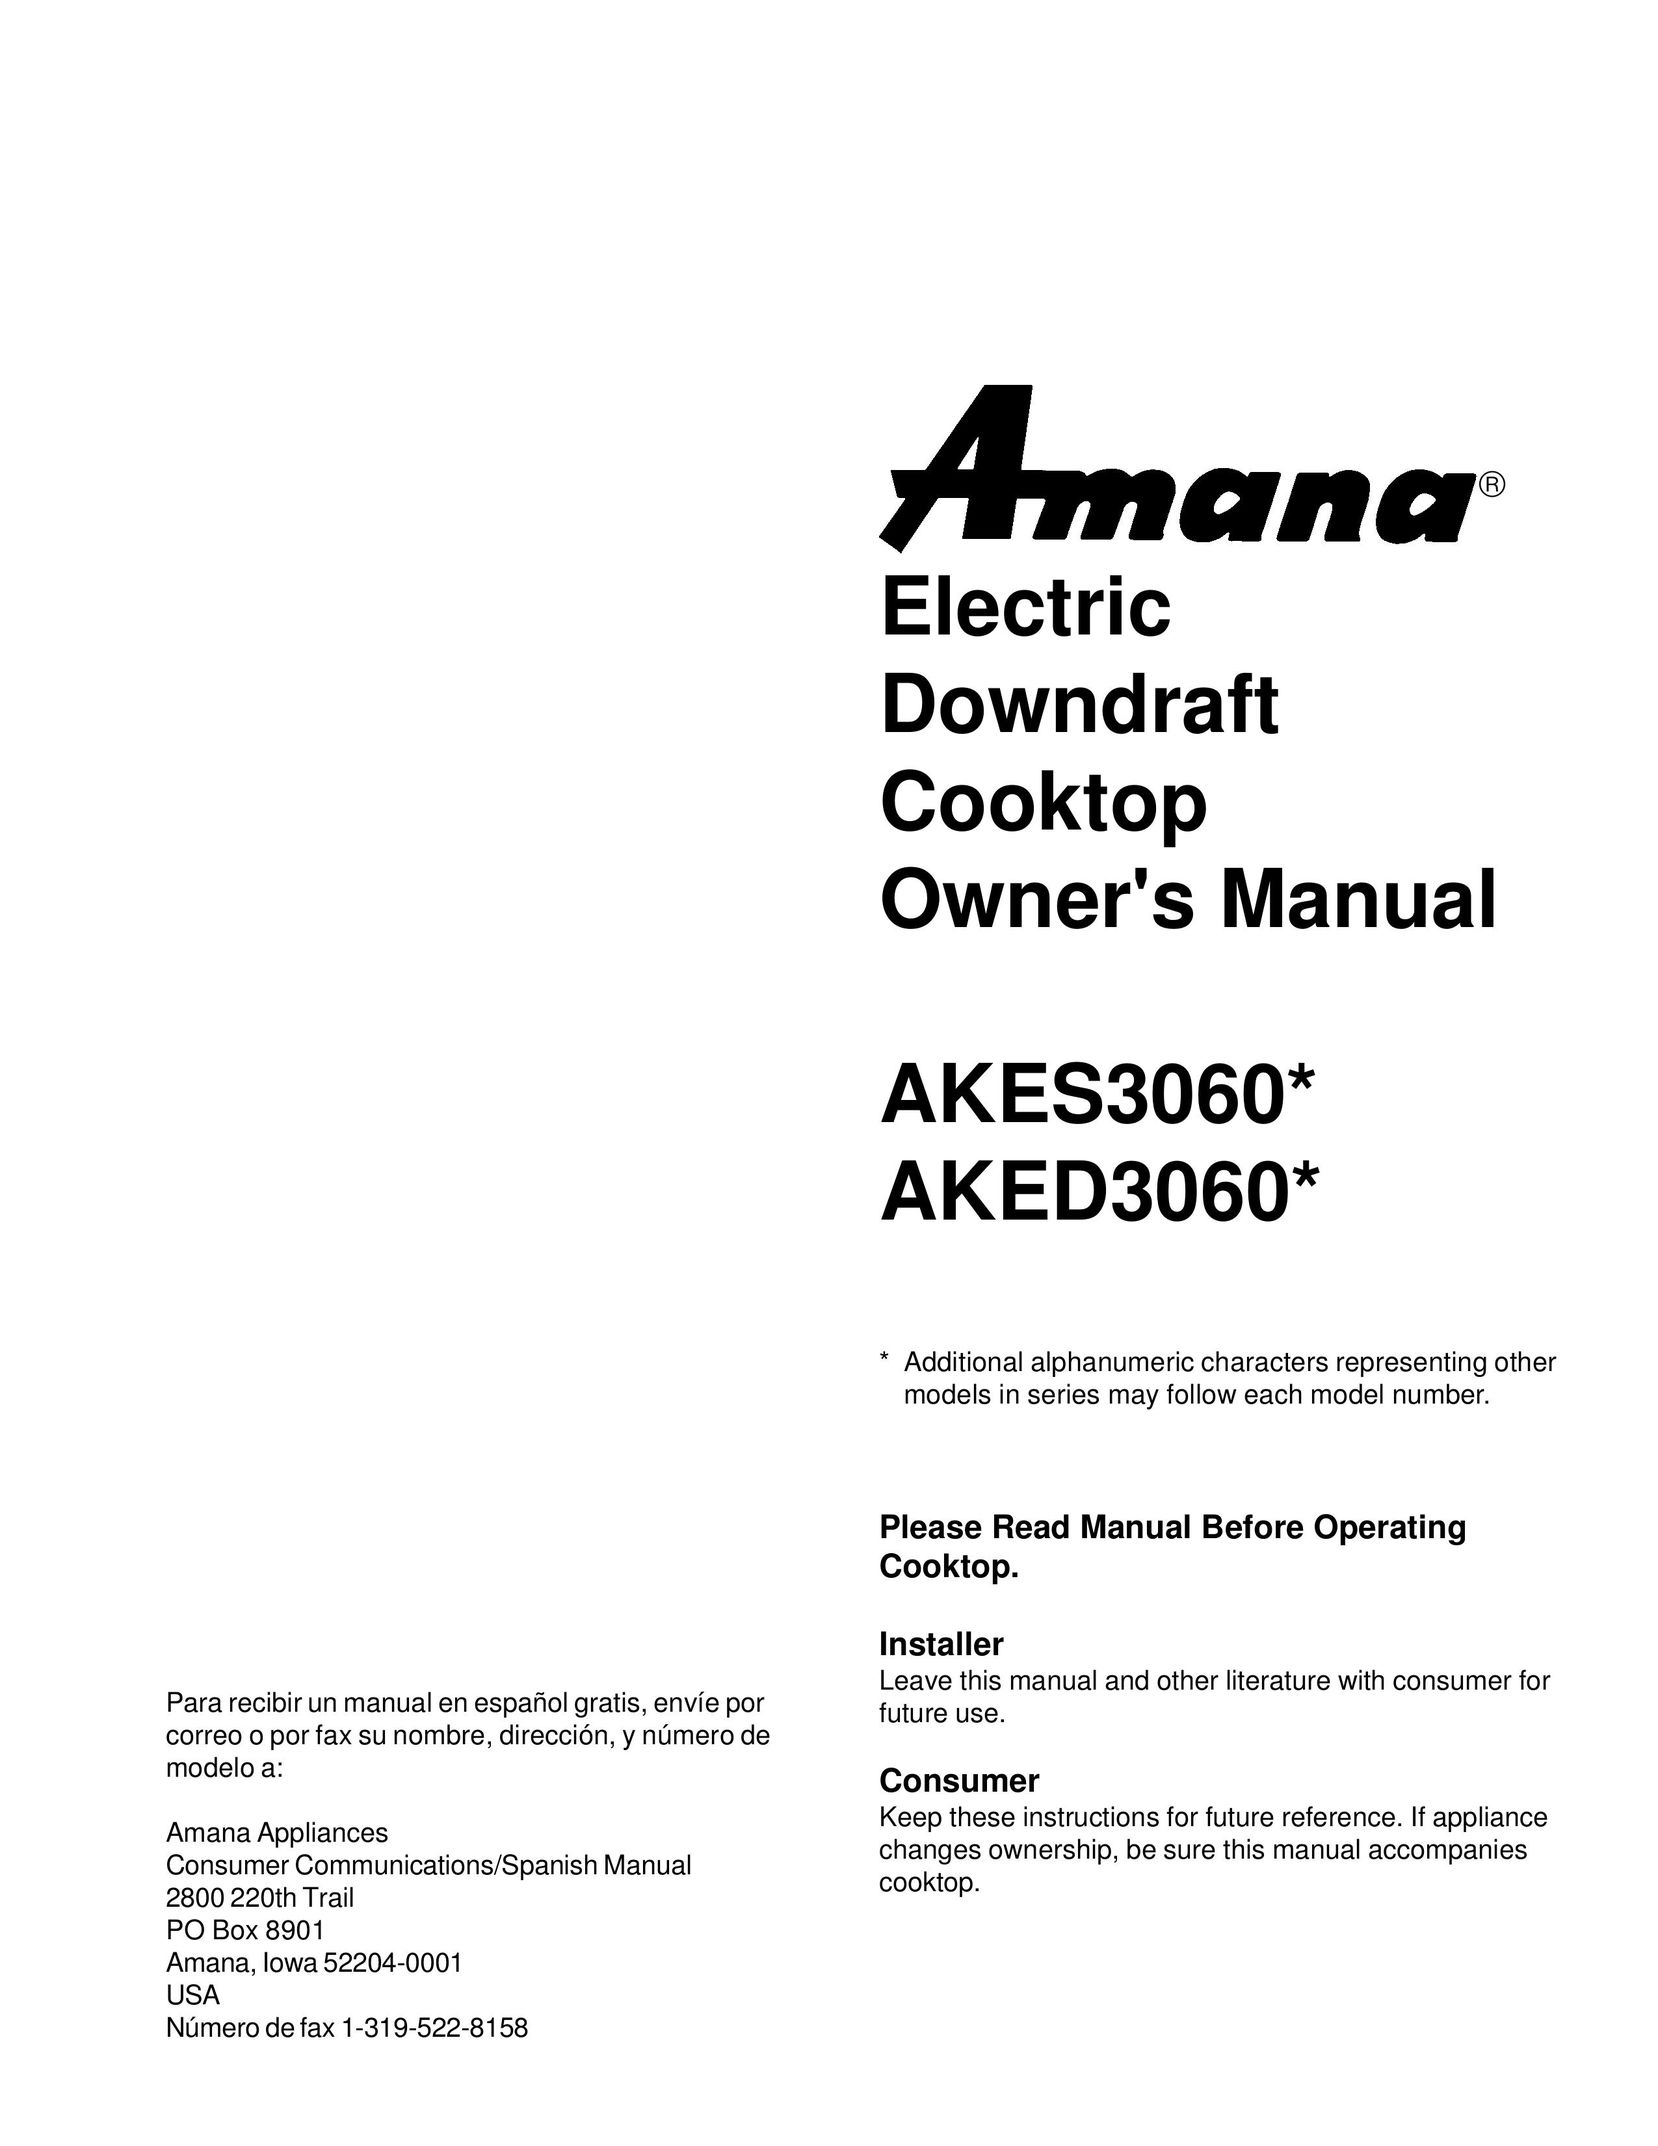 Amana AKED3060 Cooktop User Manual